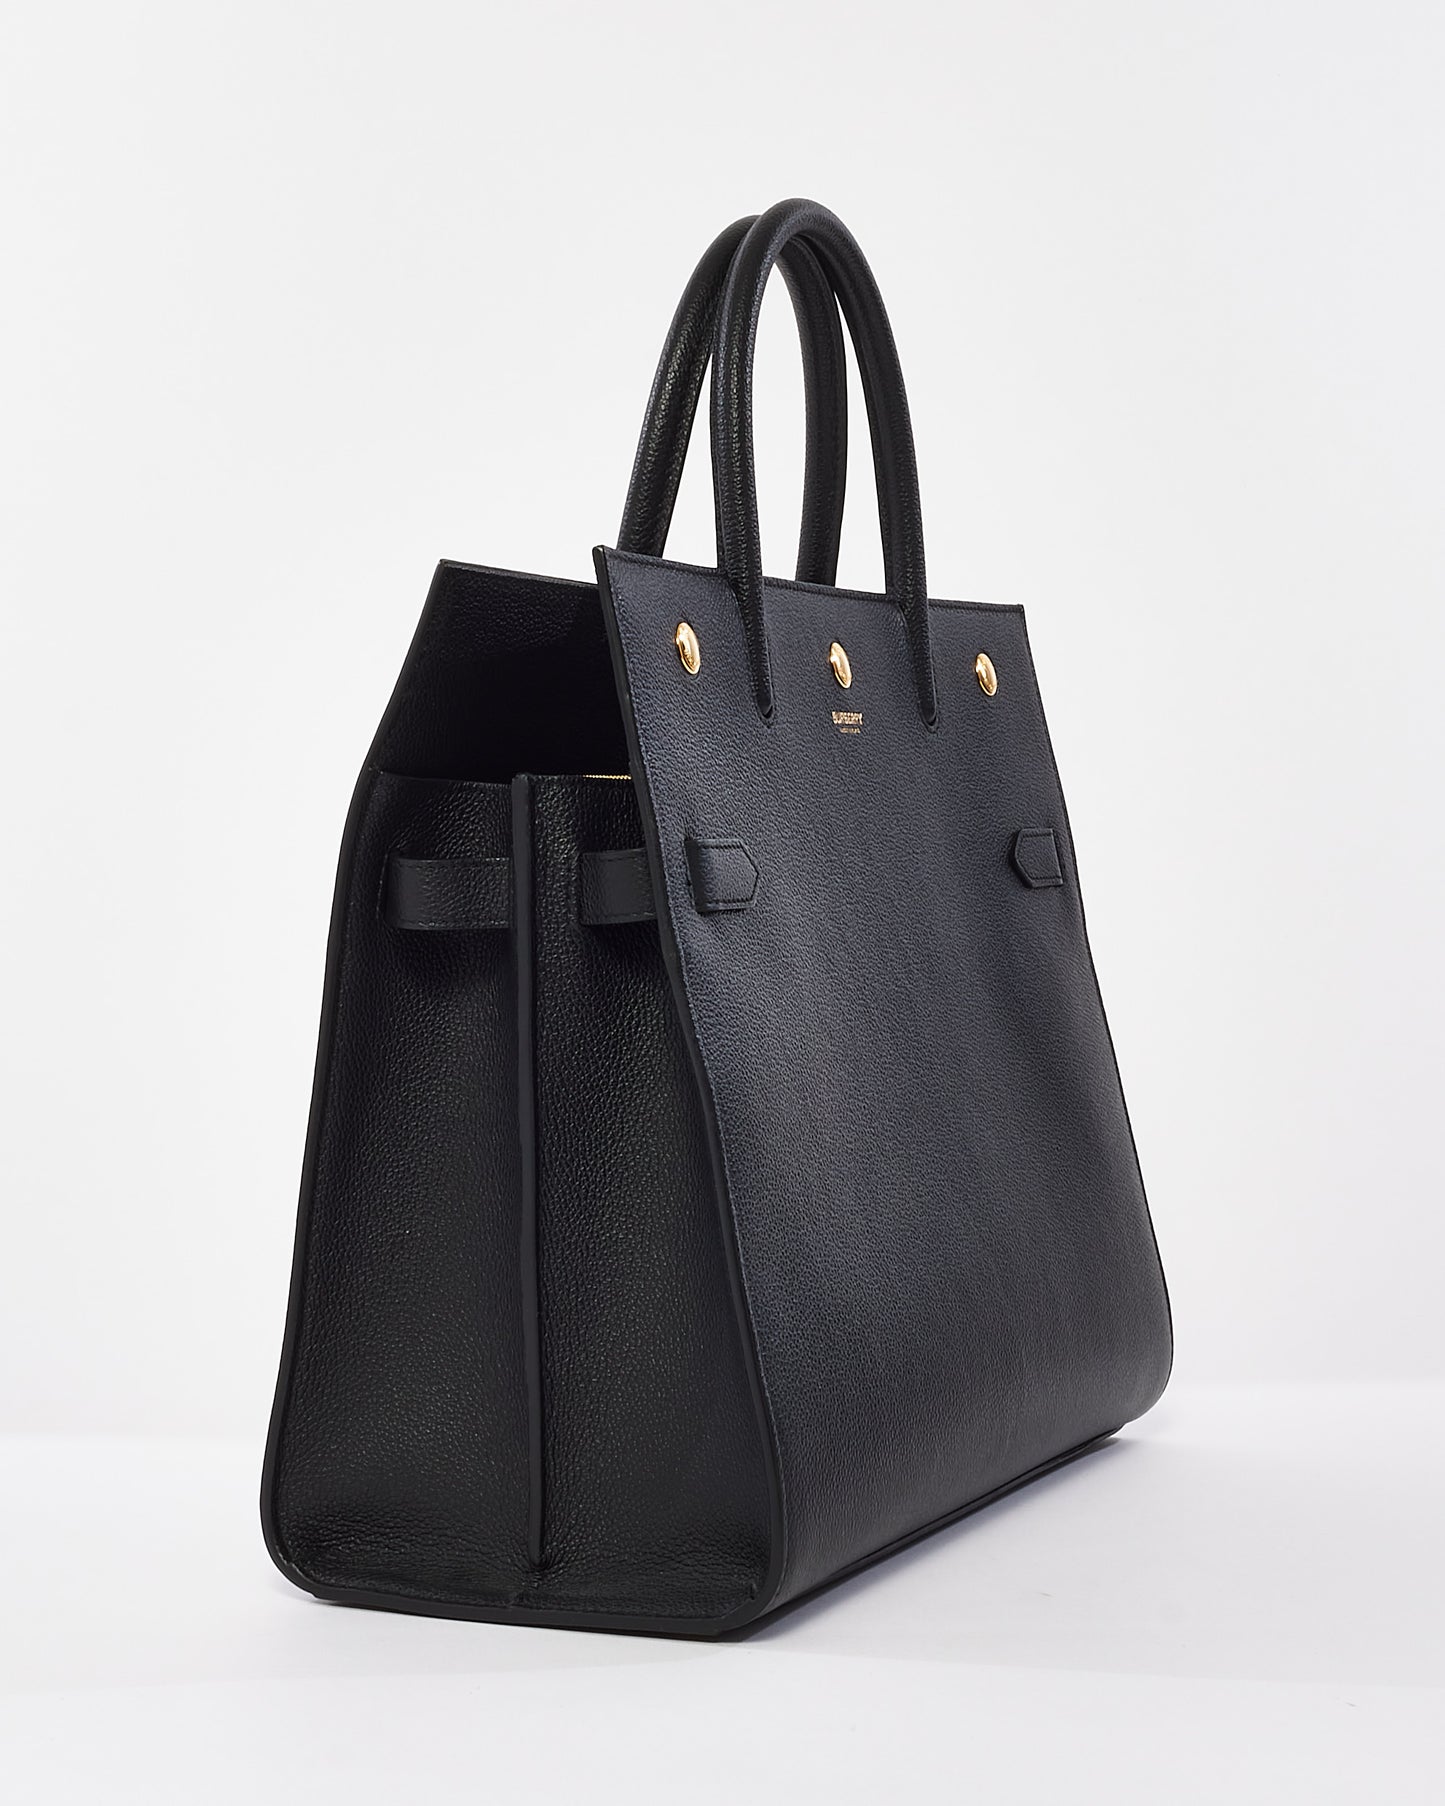 Burberry Black Leather Medium Title Tote Bag